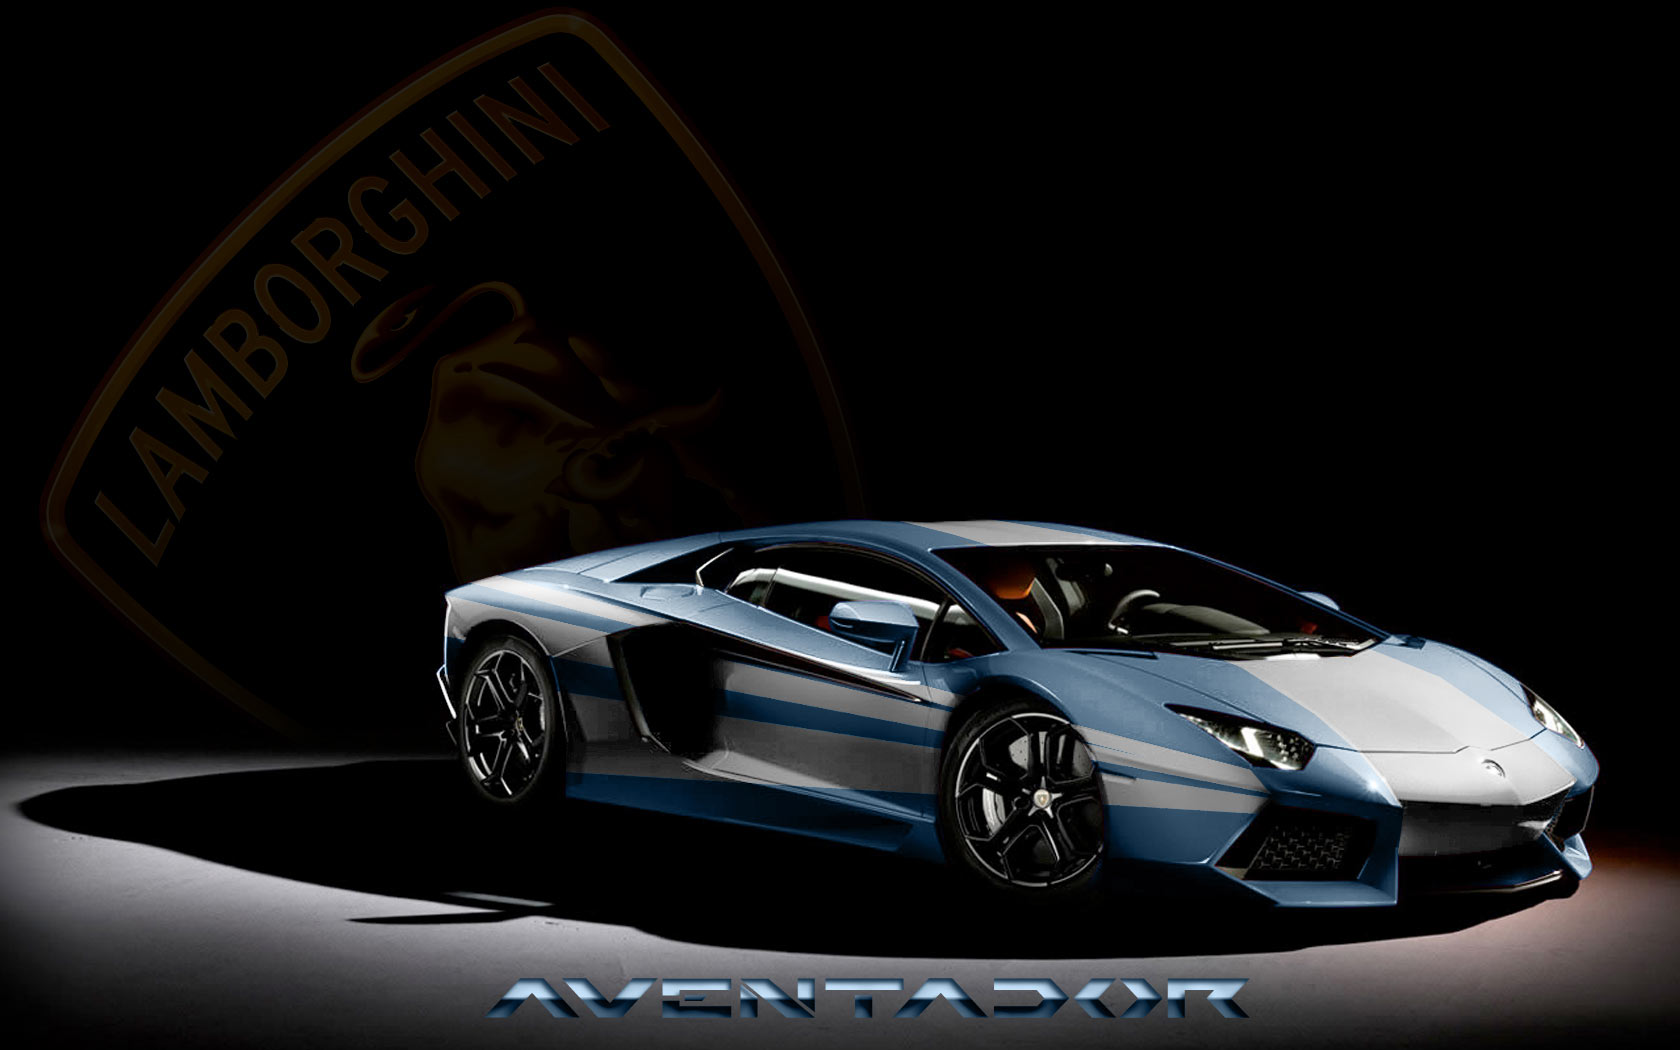 Lamborghini Aventador Hd Wallpaper For Laptop